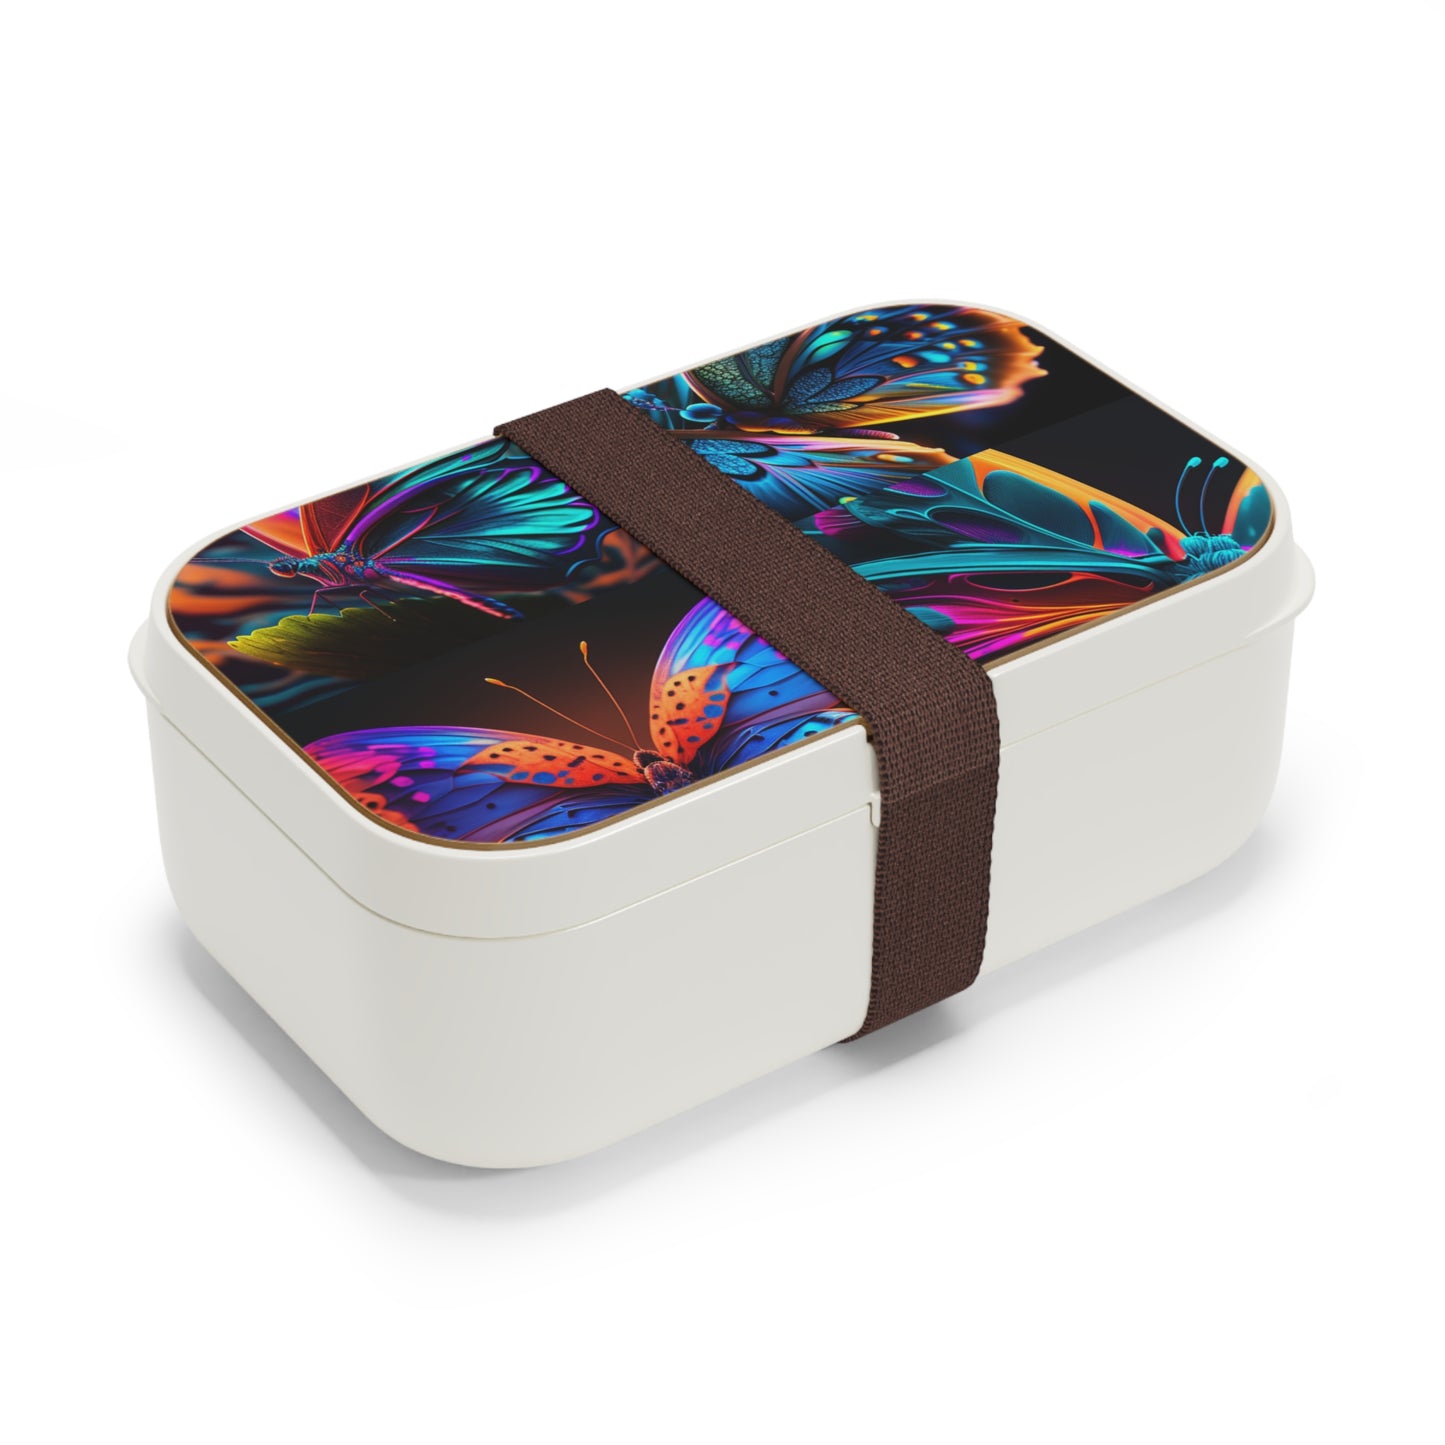 Bento Lunch Box Neon Butterfly Macro 5